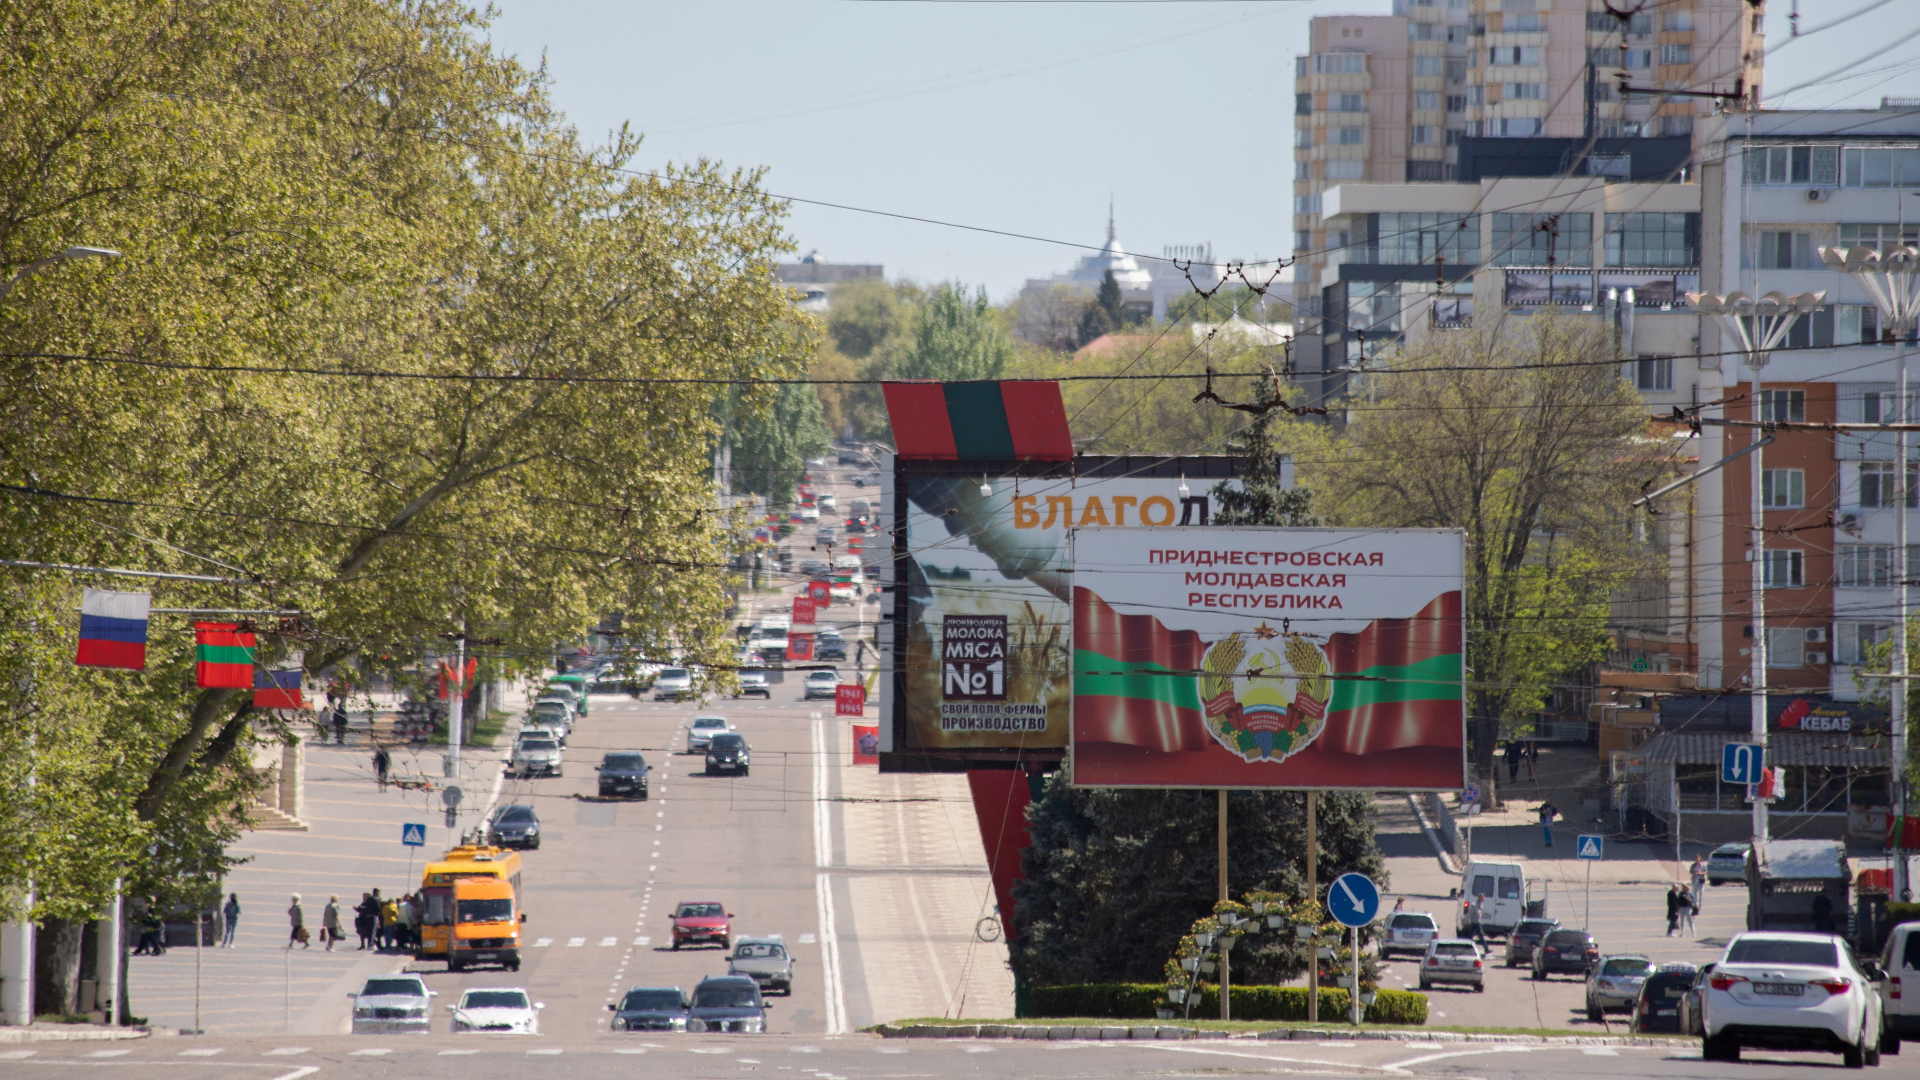 Tiraspol (Transnistrien) | REUTERS